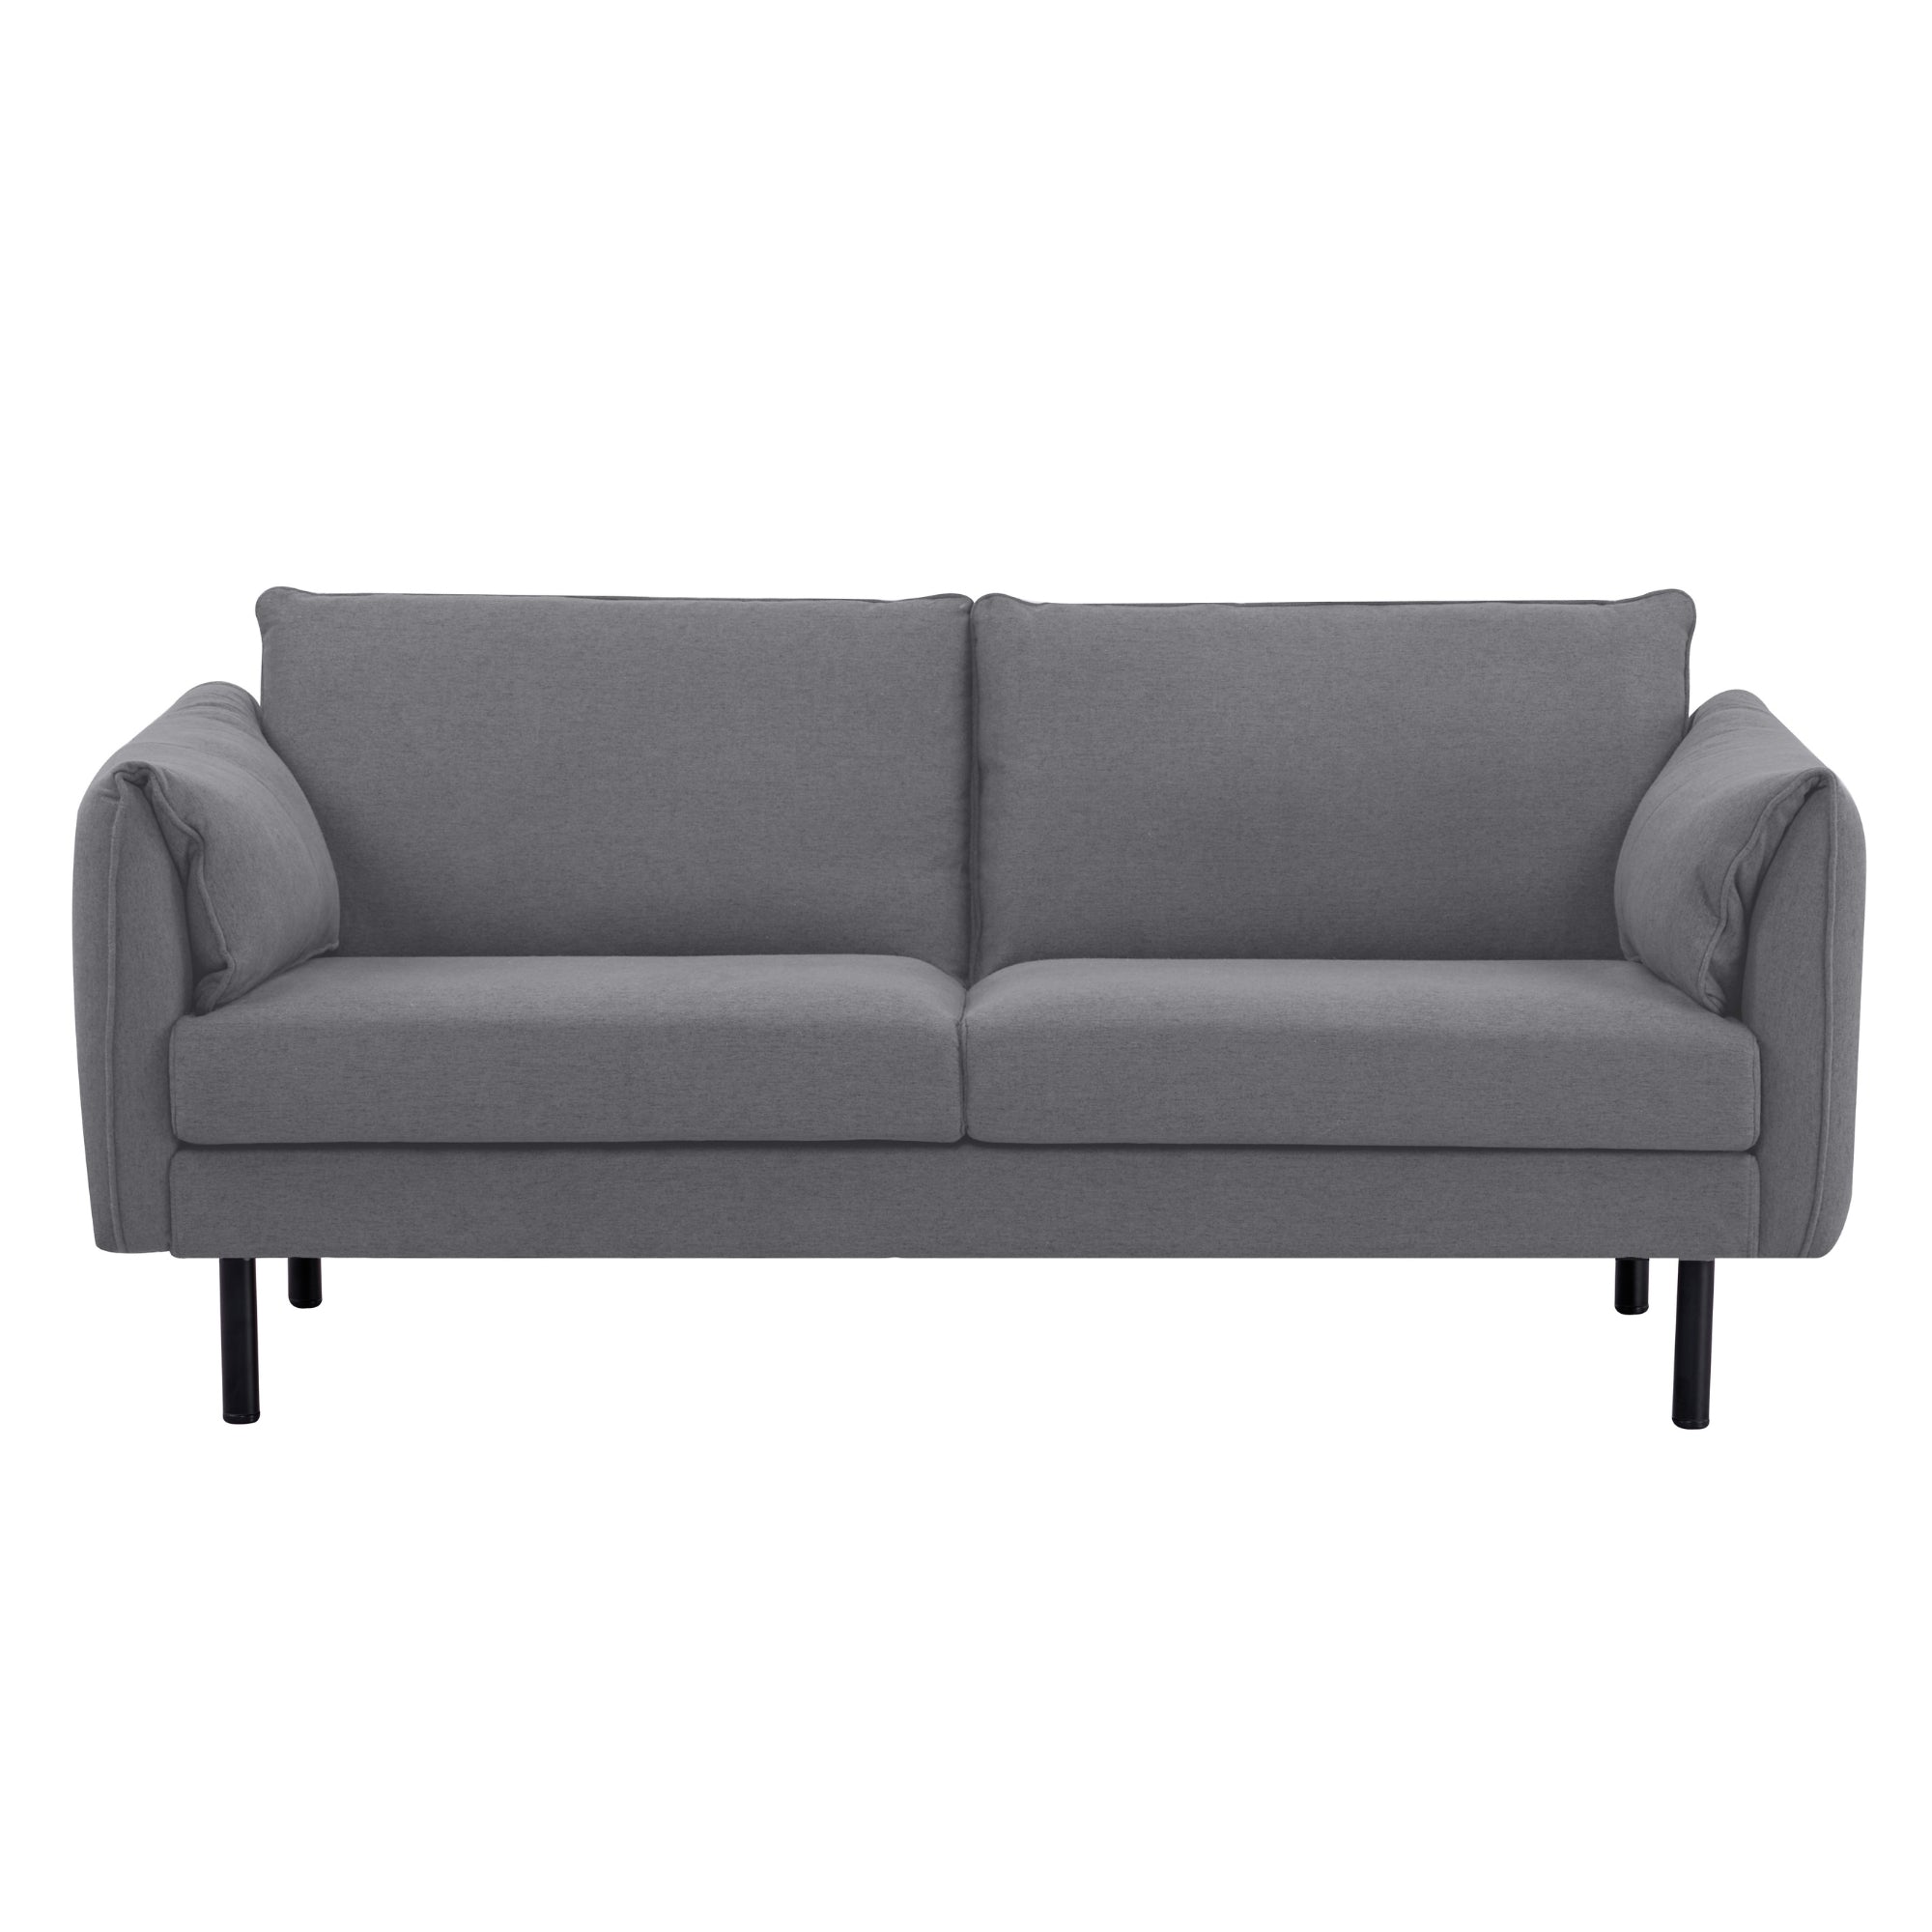 Dark Grey 3-Seater Fabric Sofa, Metal Legs, Foam Support